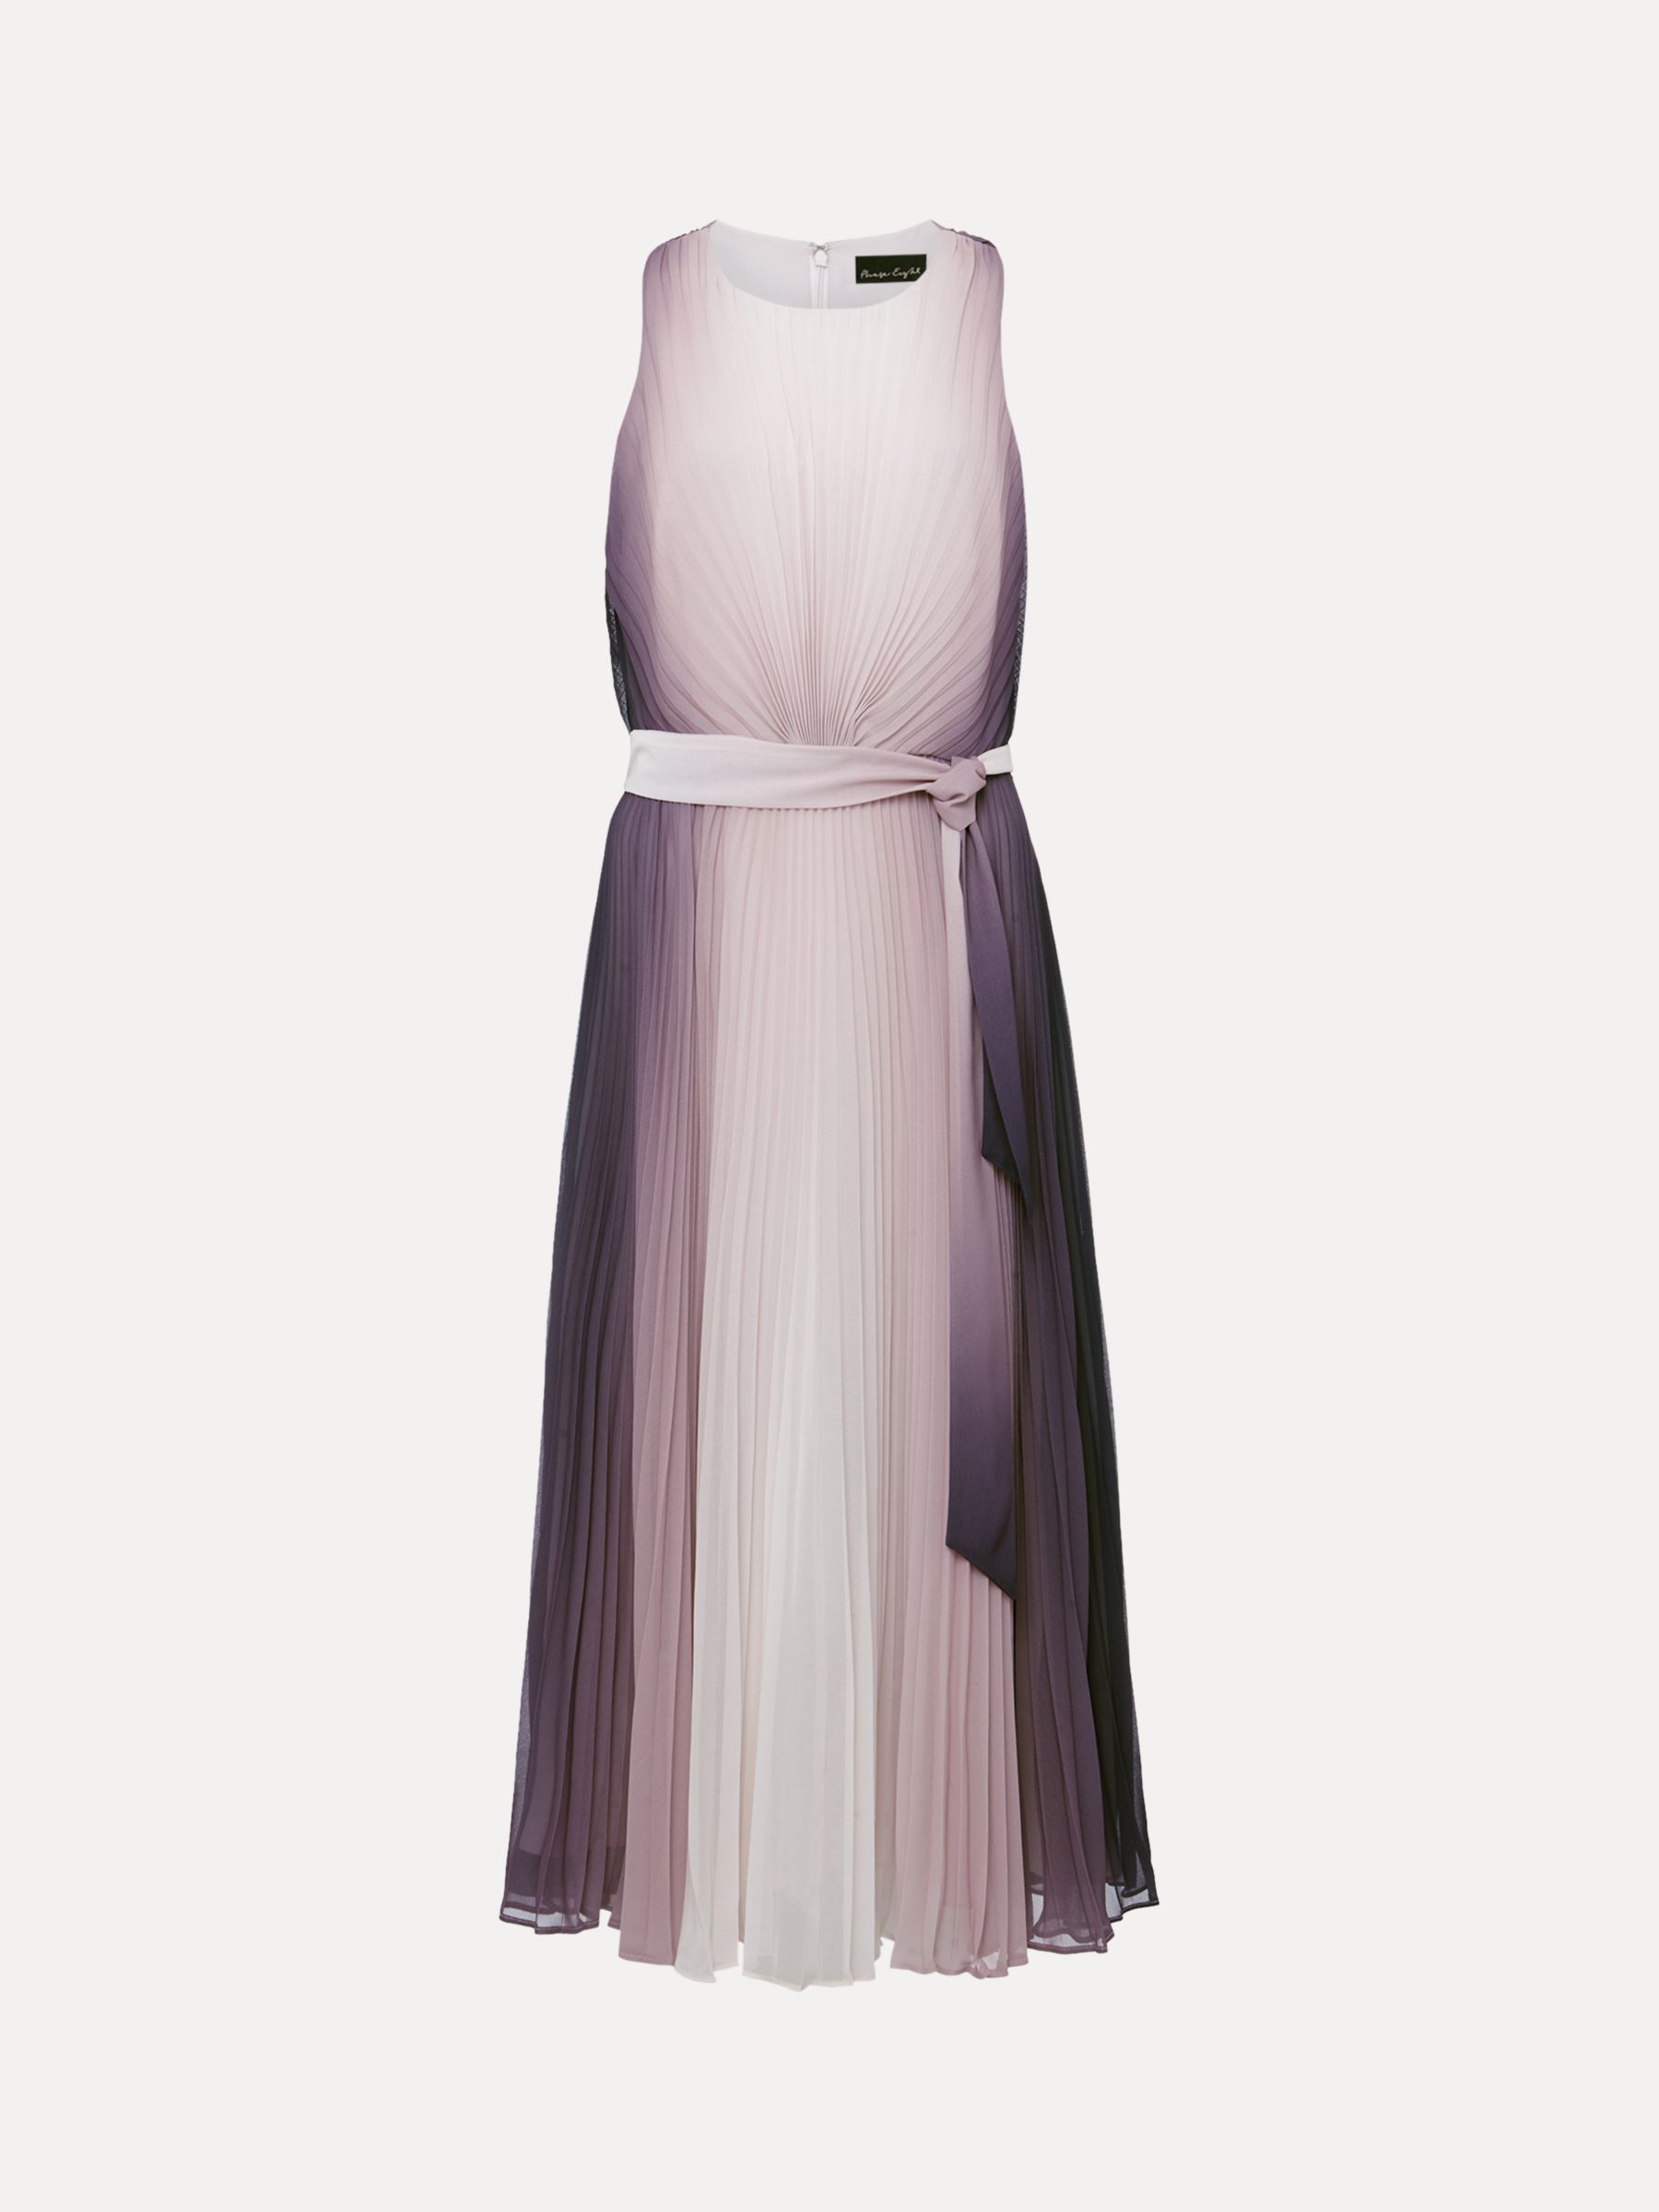 Phase Eight Petite Simara Pleated Midi Dress, Latte/Navy, 8